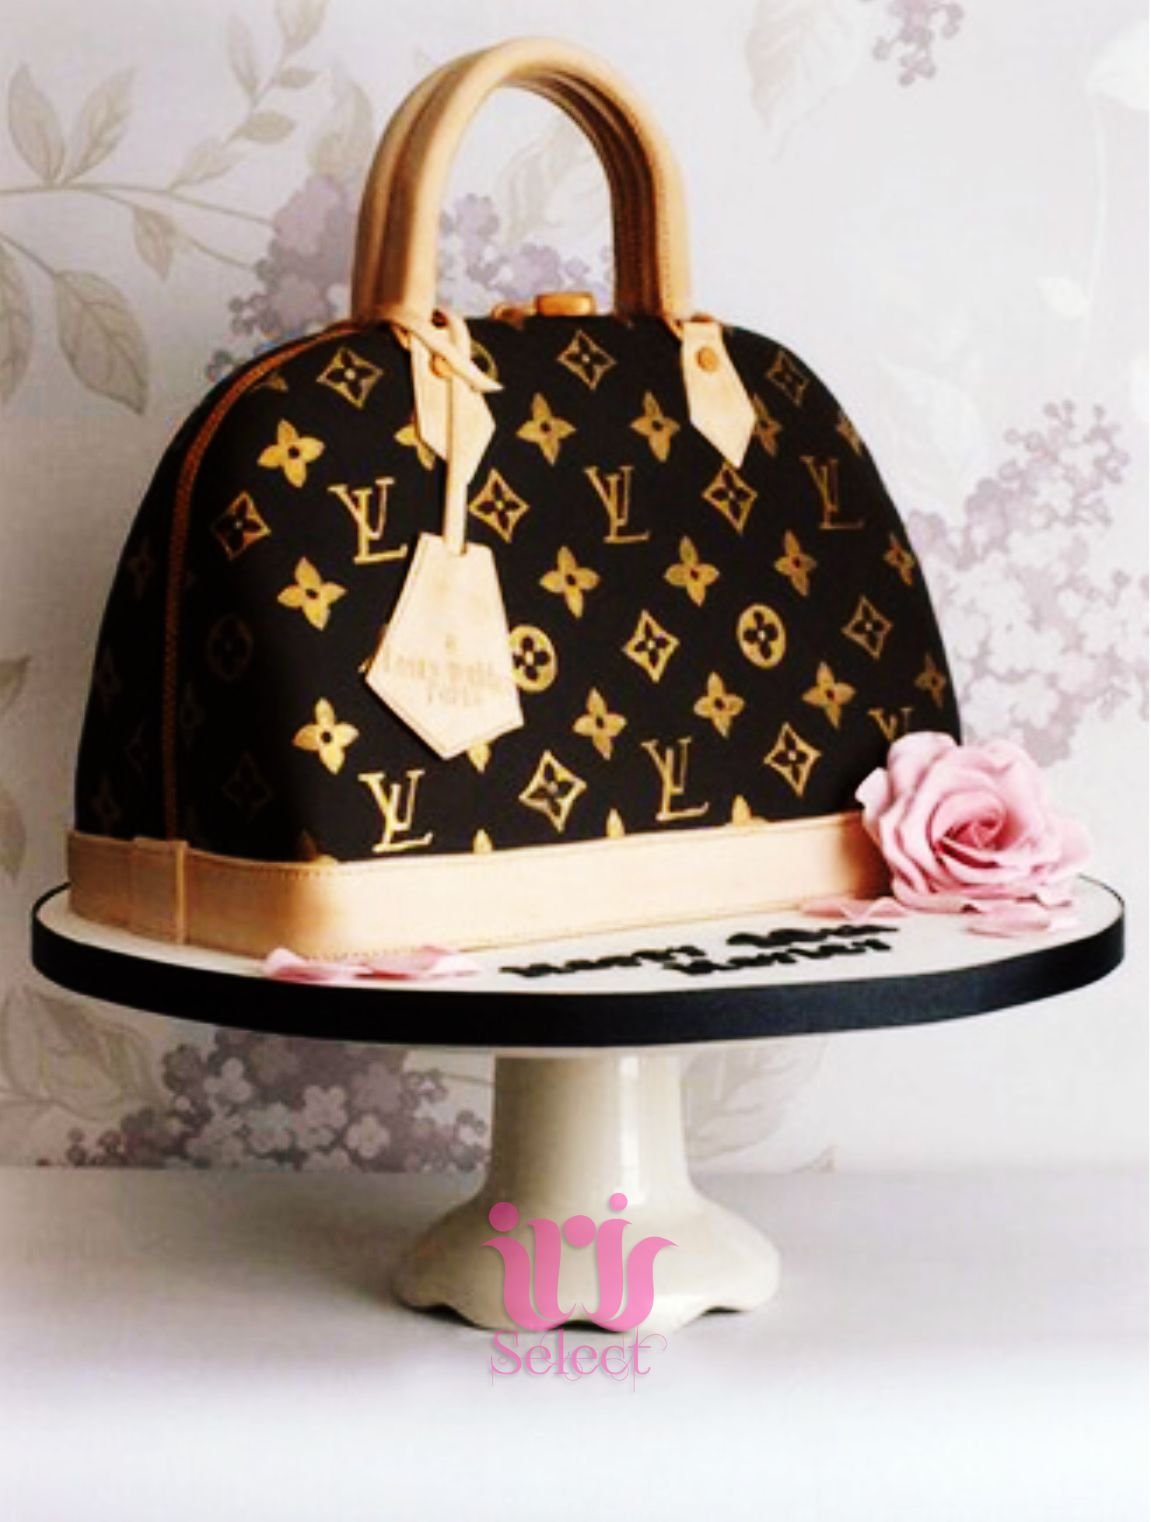 3D Louis Vuitton Handbag shaped cake in brown, caramel, iv… | Flickr